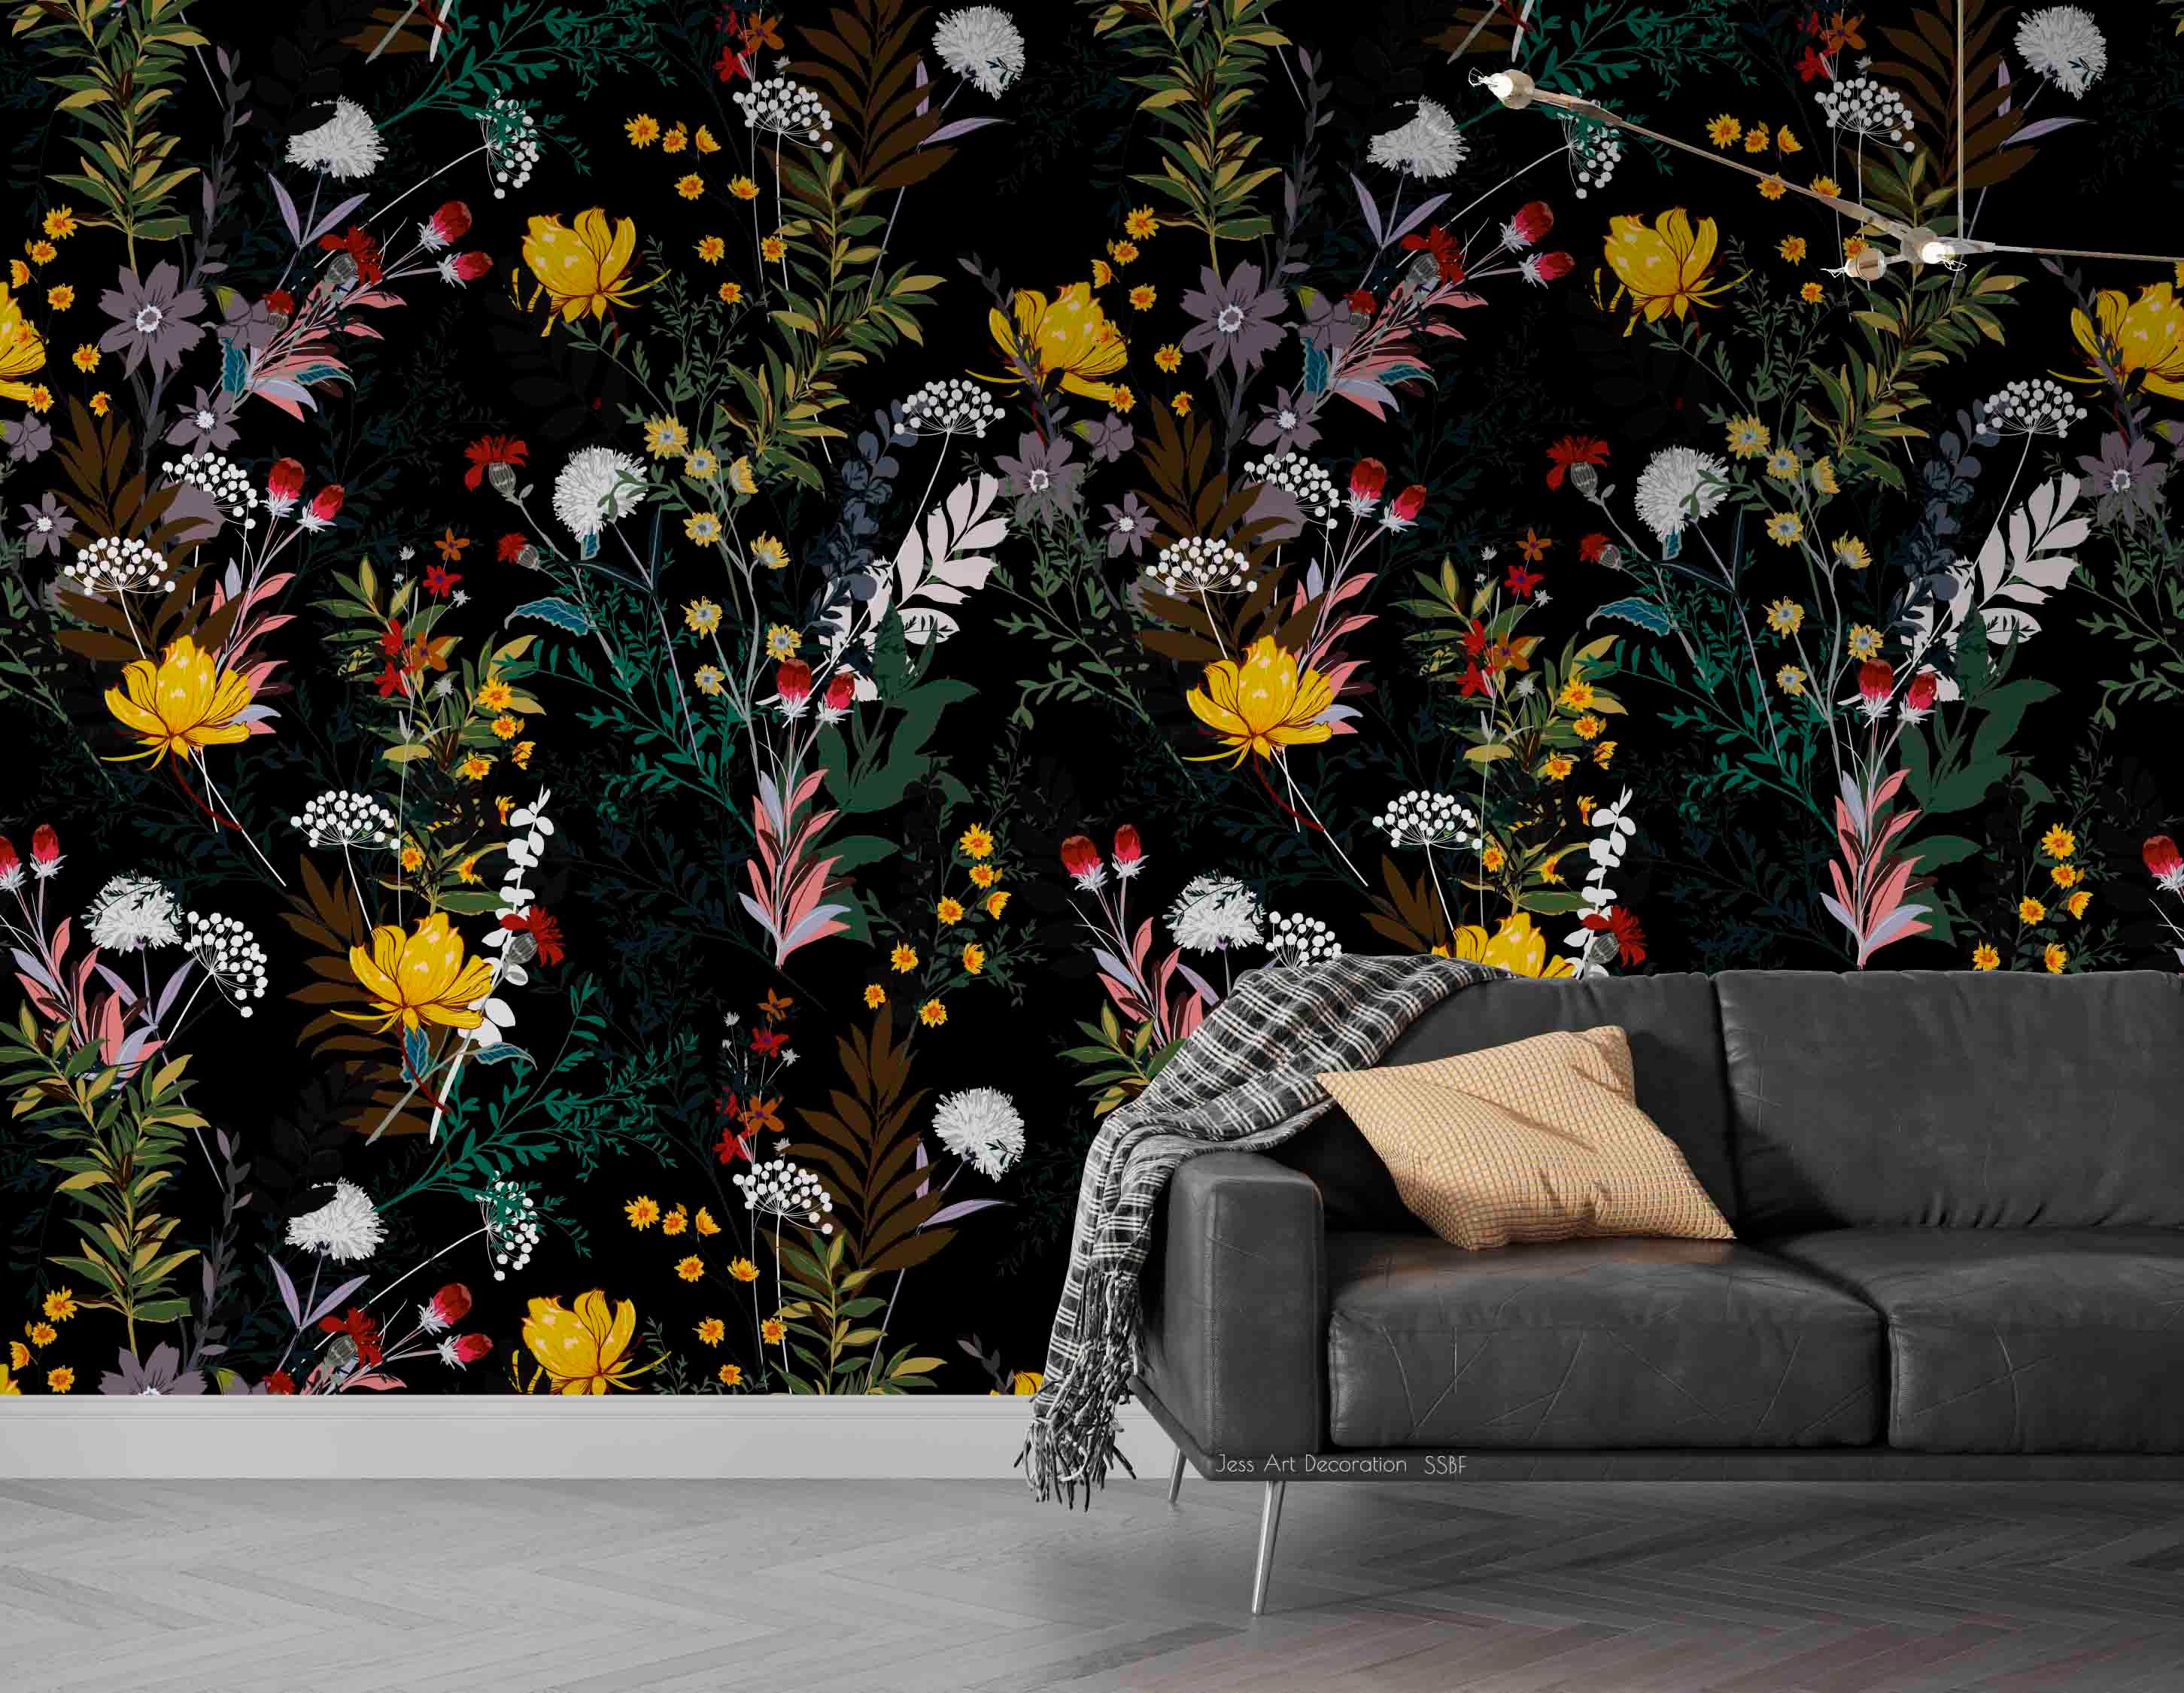 3D Vintage Watercolor Plants Leaves Flowers Black Background Wall Mural Wallpaper GD 3597- Jess Art Decoration